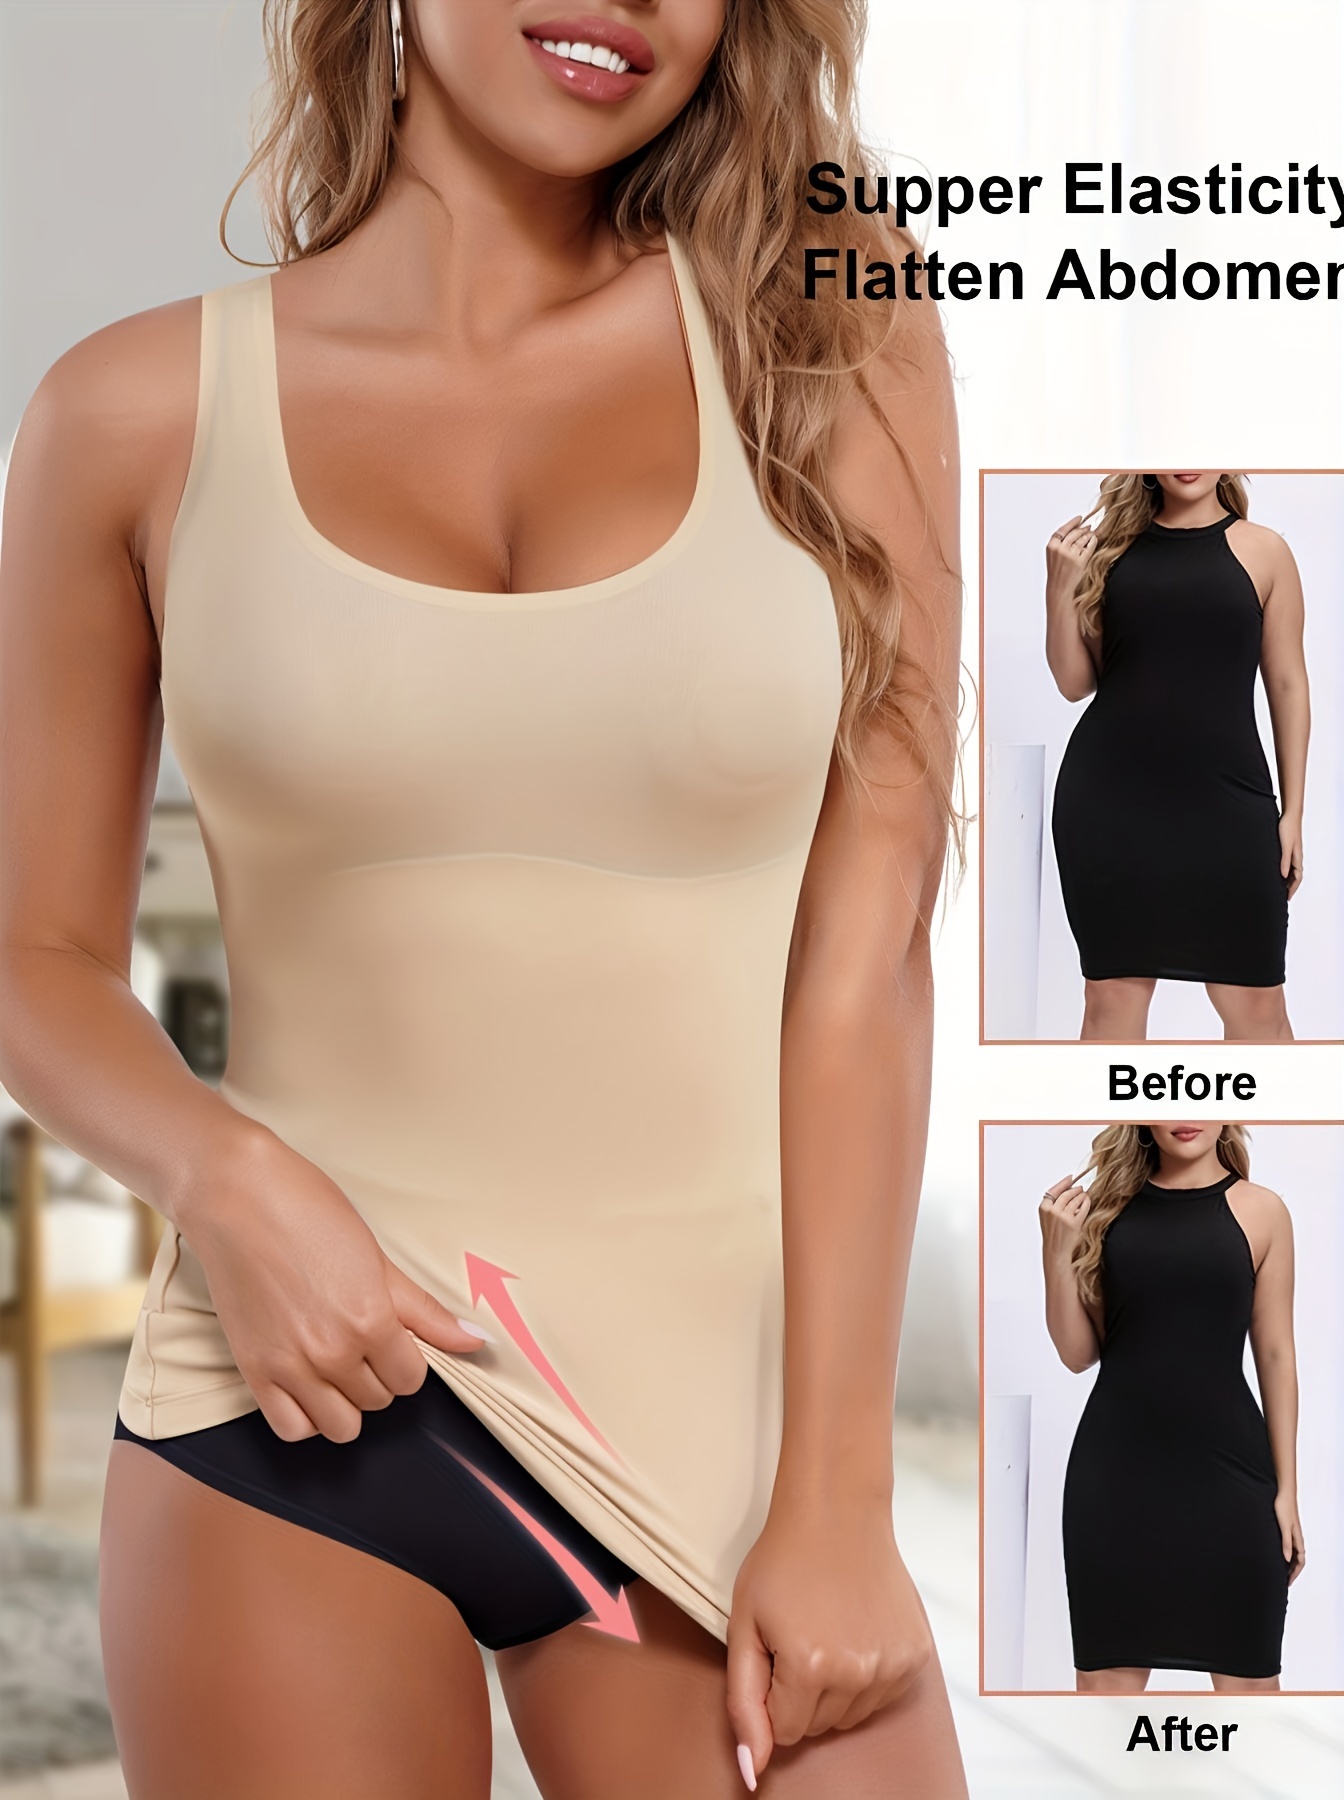 Women Tummy Control Body Shaper Cami Tank Top Compression Vest Slimmer  Shapewear